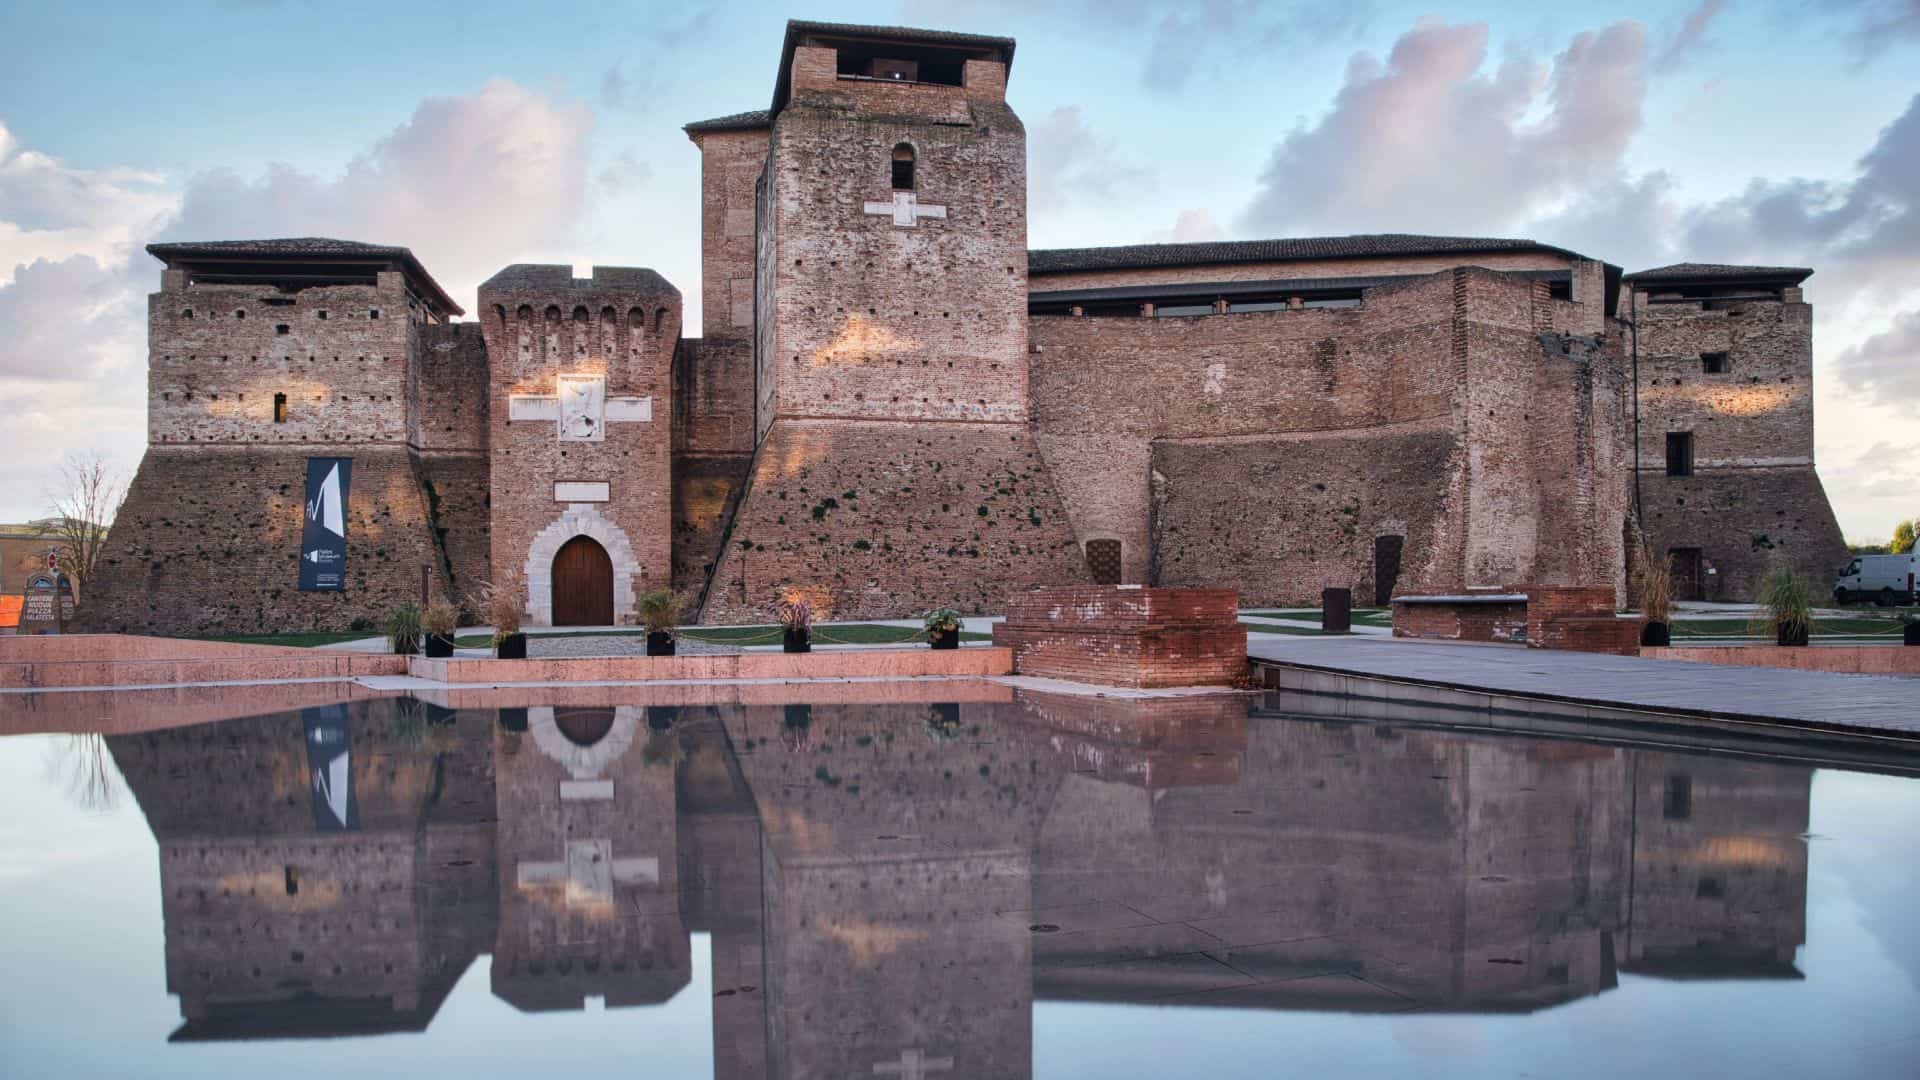 The fortress of Rimini